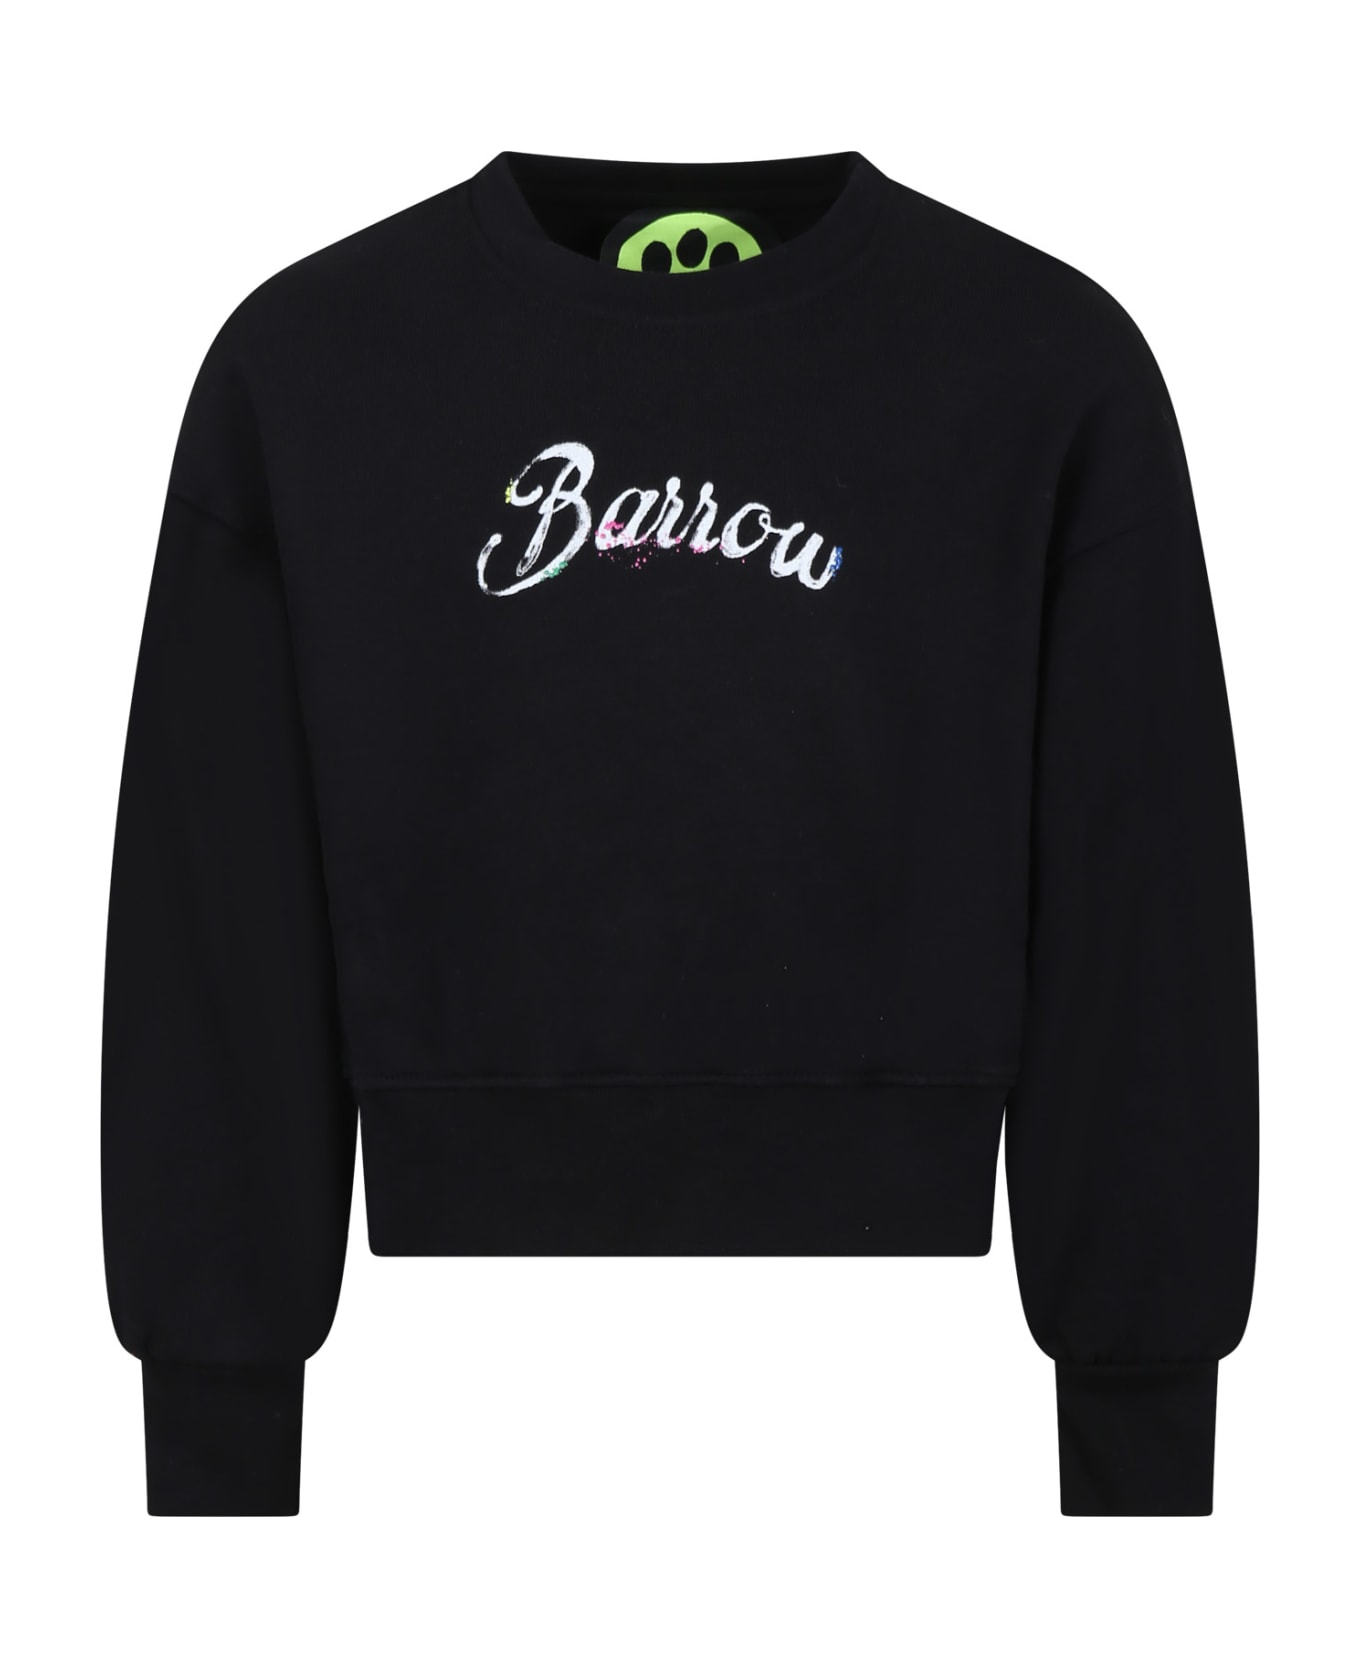 Barrow Black Sweatshirt For Girl With Smiley Face And Logo - Black ニットウェア＆スウェットシャツ